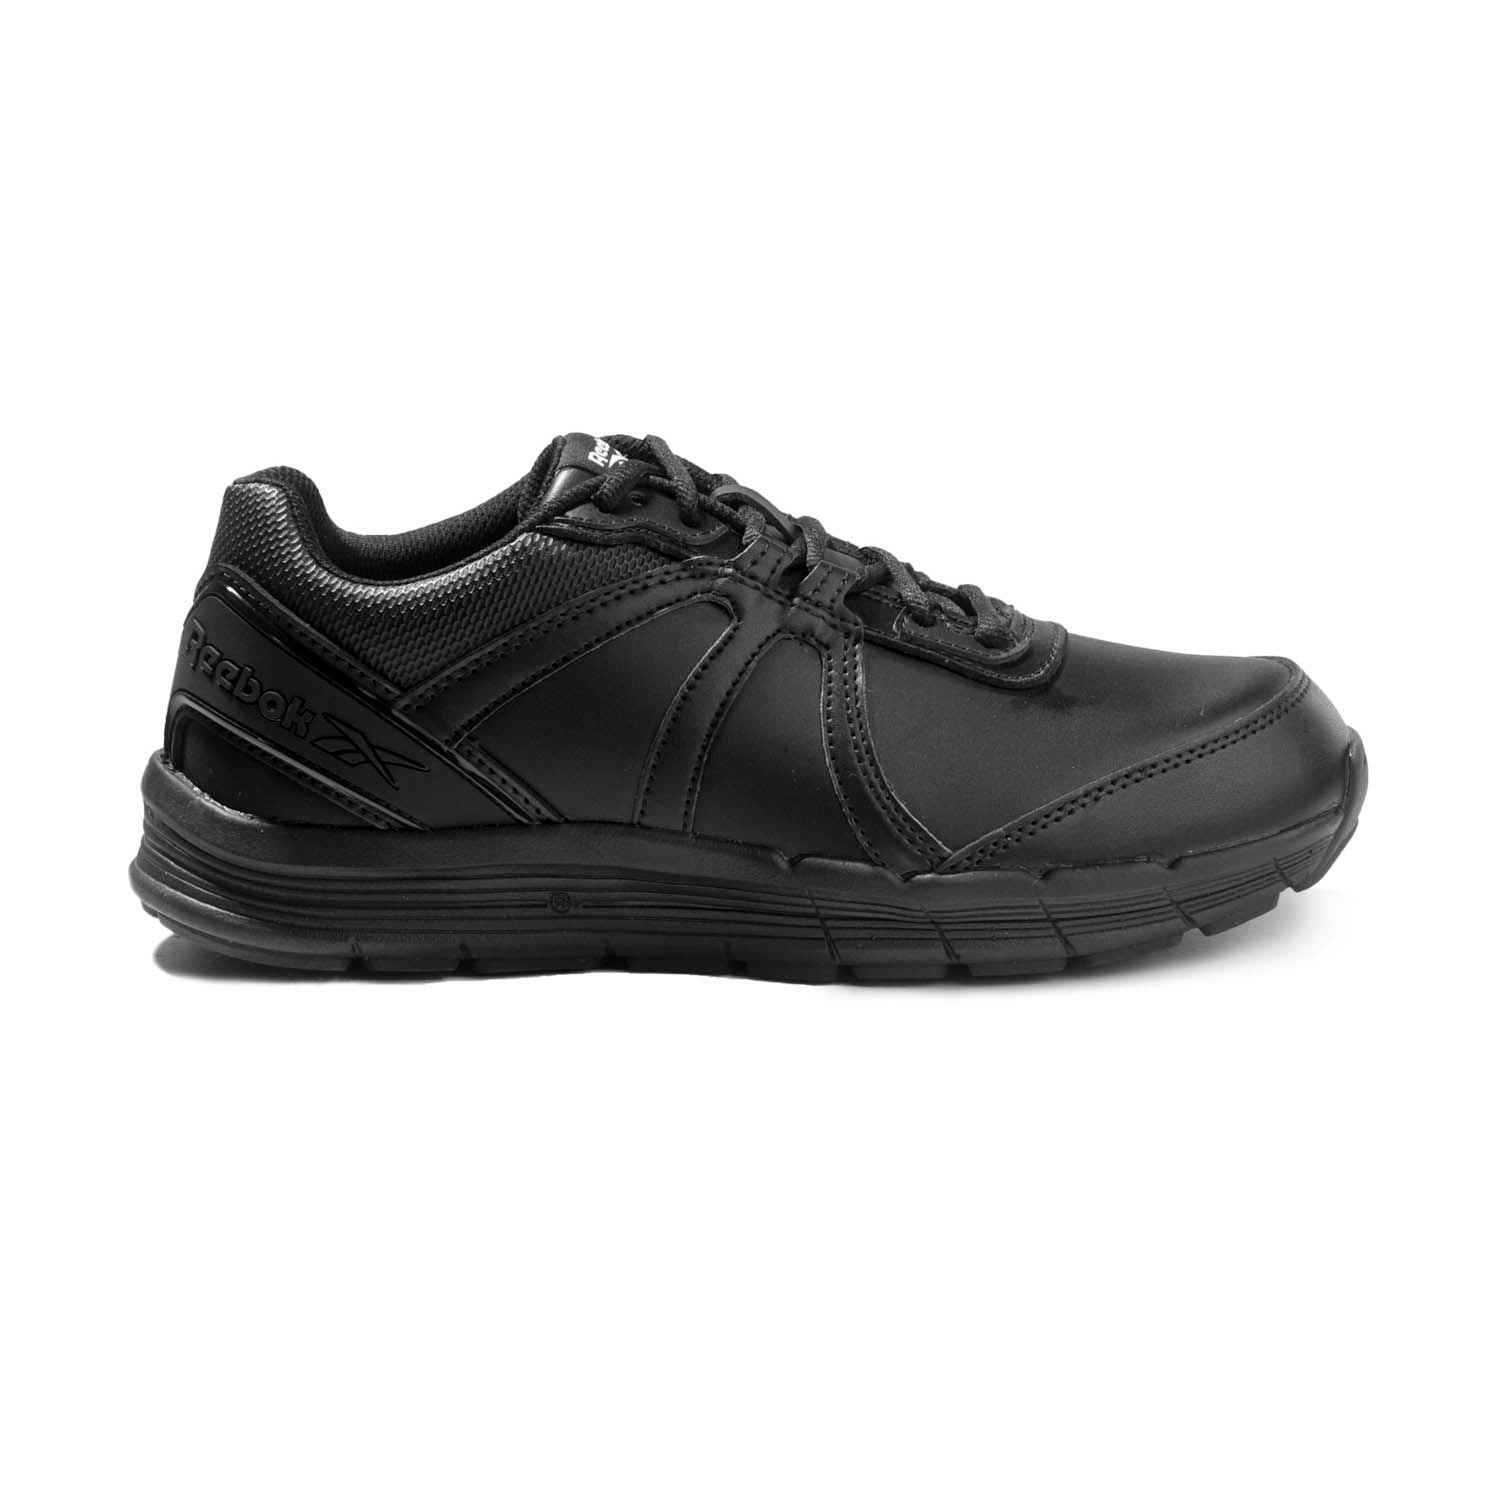 Reebok Men's Guide Work Performance Slip Resistant Cross Trainer Shoes